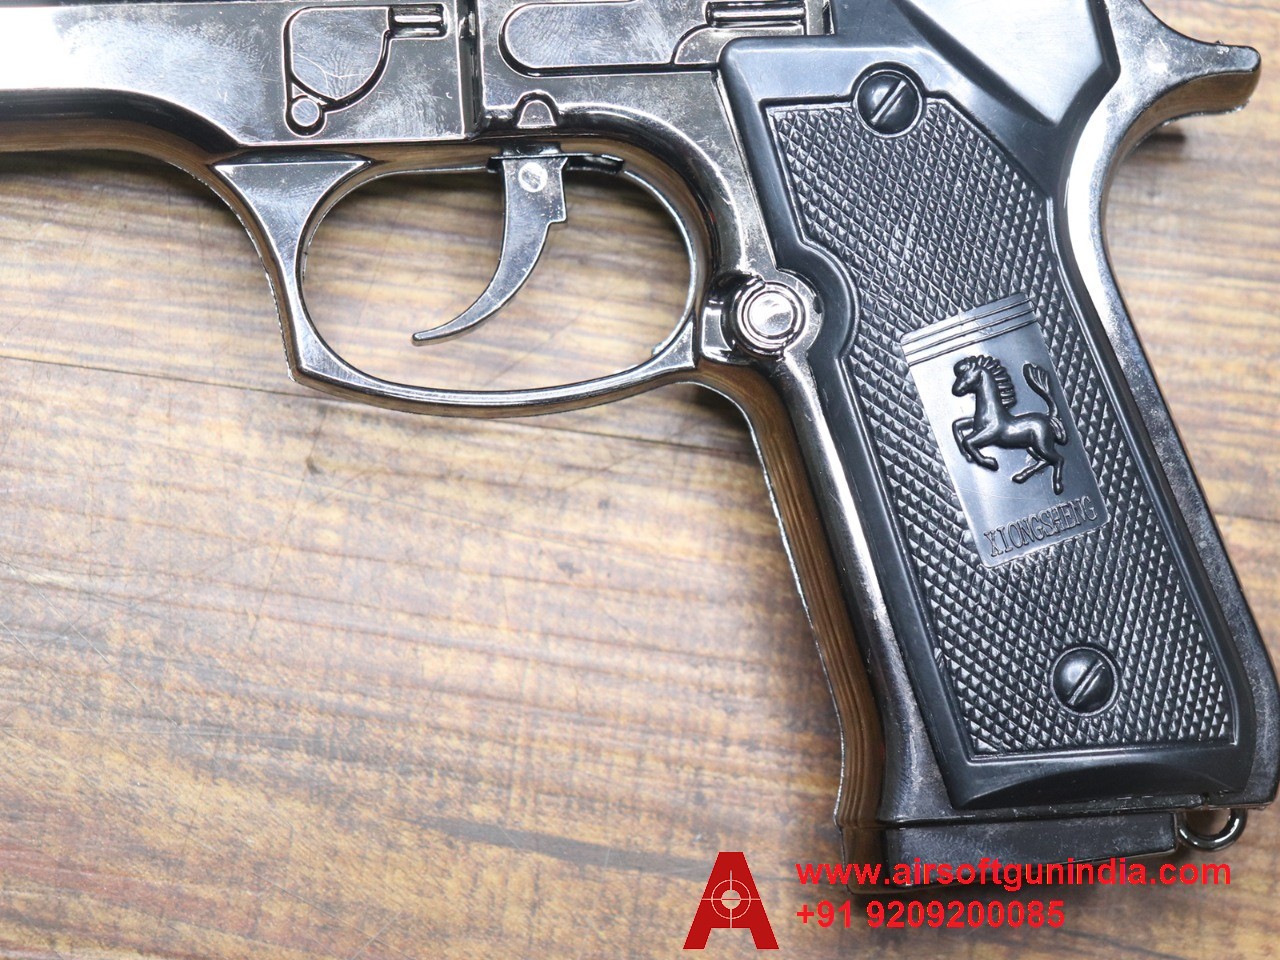 BERETTA 9MM SILVER REPLICA LIGHTER GUN BY AIRSOFT GUN INDIA